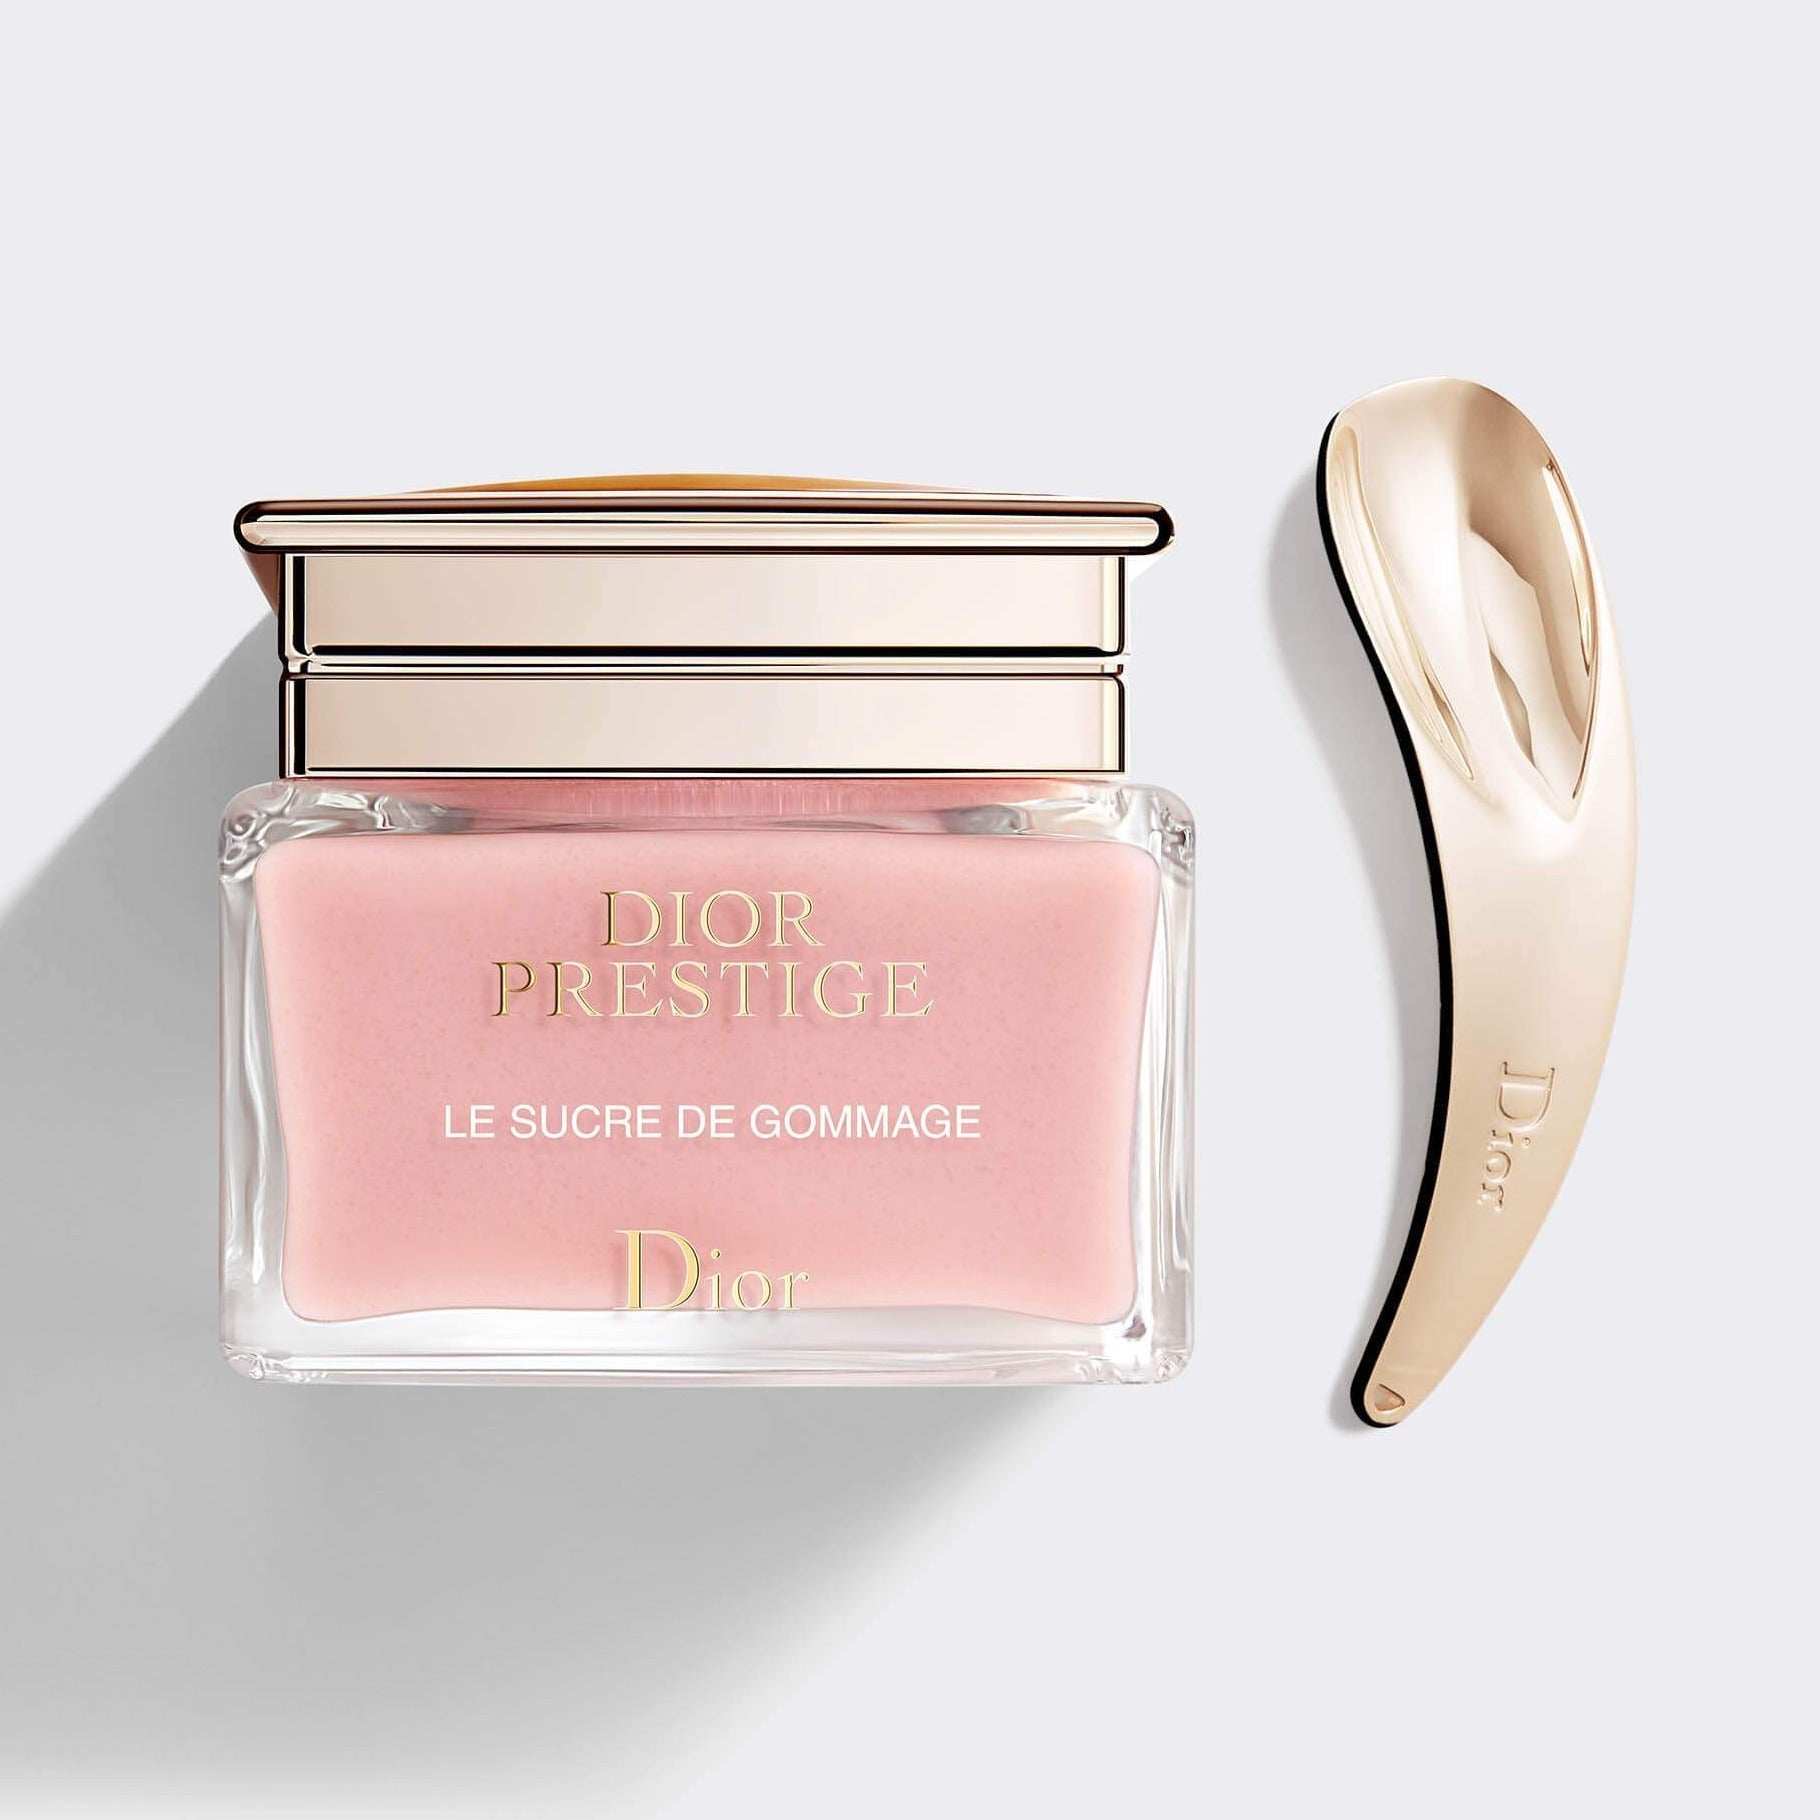 Dior Prestige Le Sucre de Gommage | Face scrub - exceptional exfoliating polishing mask